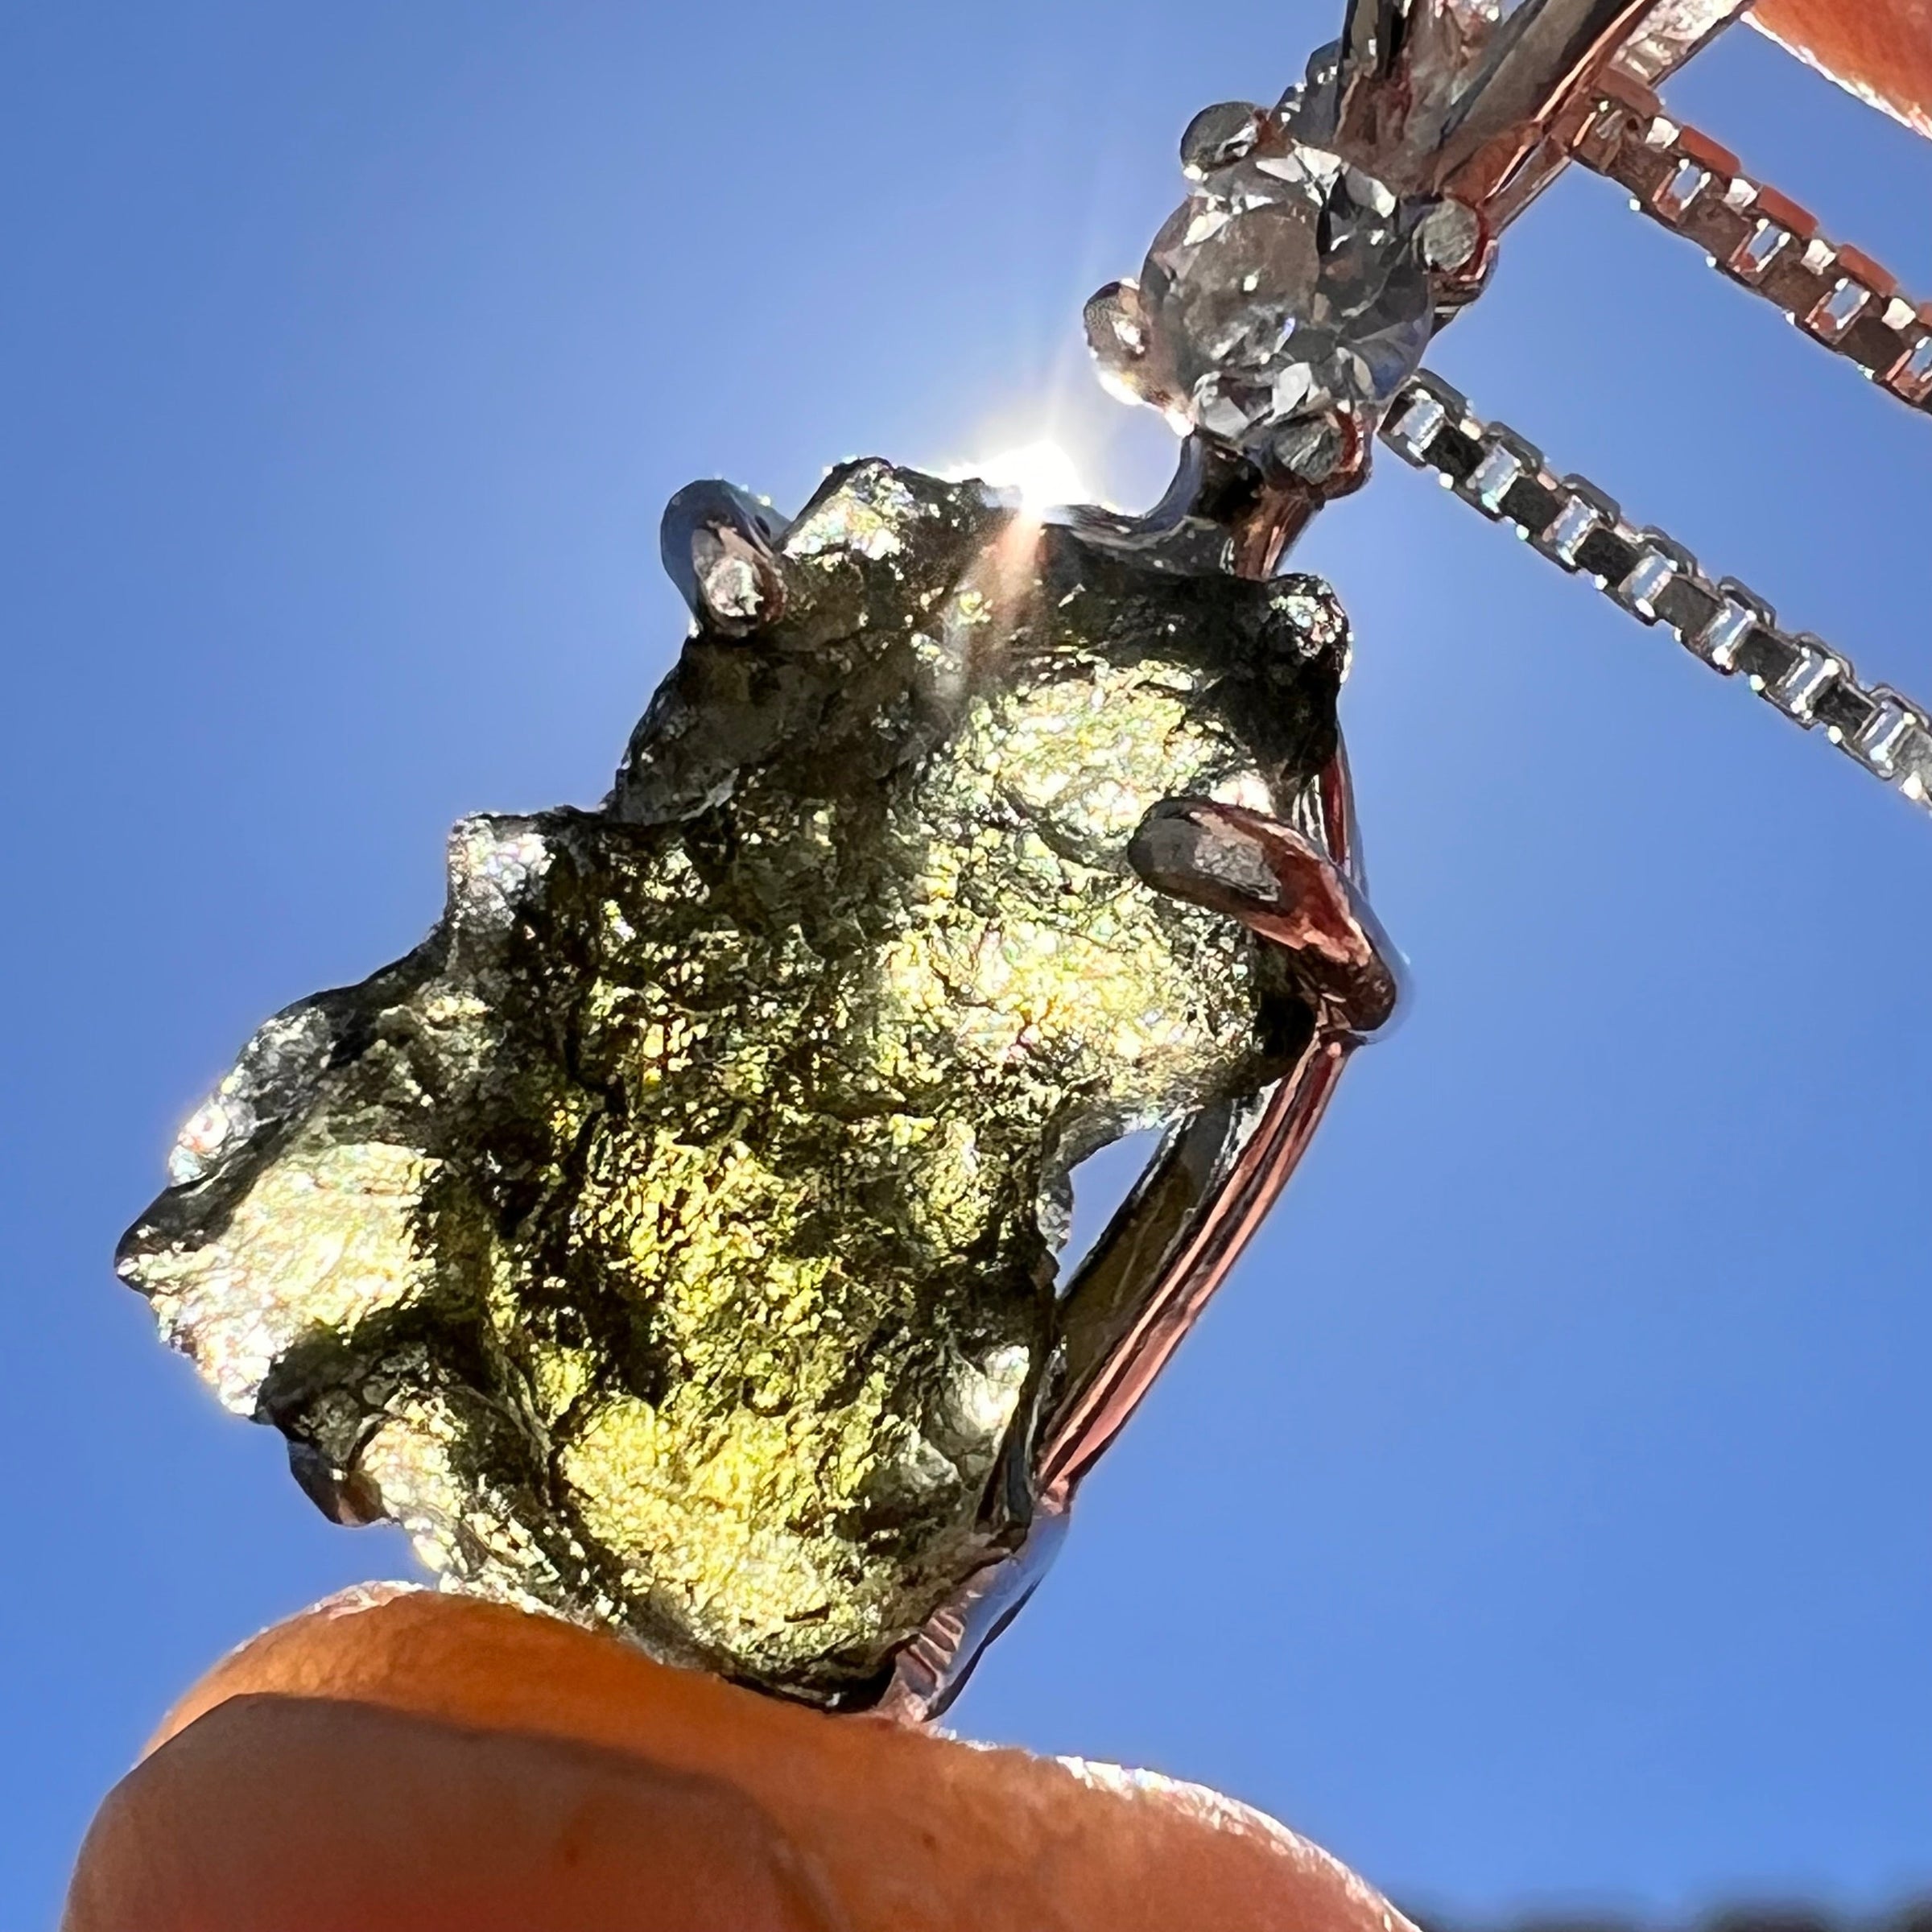 Moldavite & Petalite Necklace Sterling Silver #5024-Moldavite Life